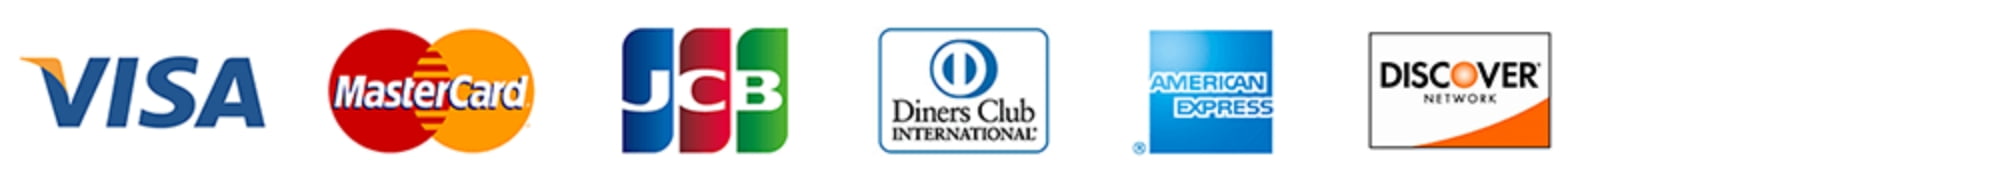 VISA MasterCard JCB Diners Club AMERICAN EXPRESS DISCOVER